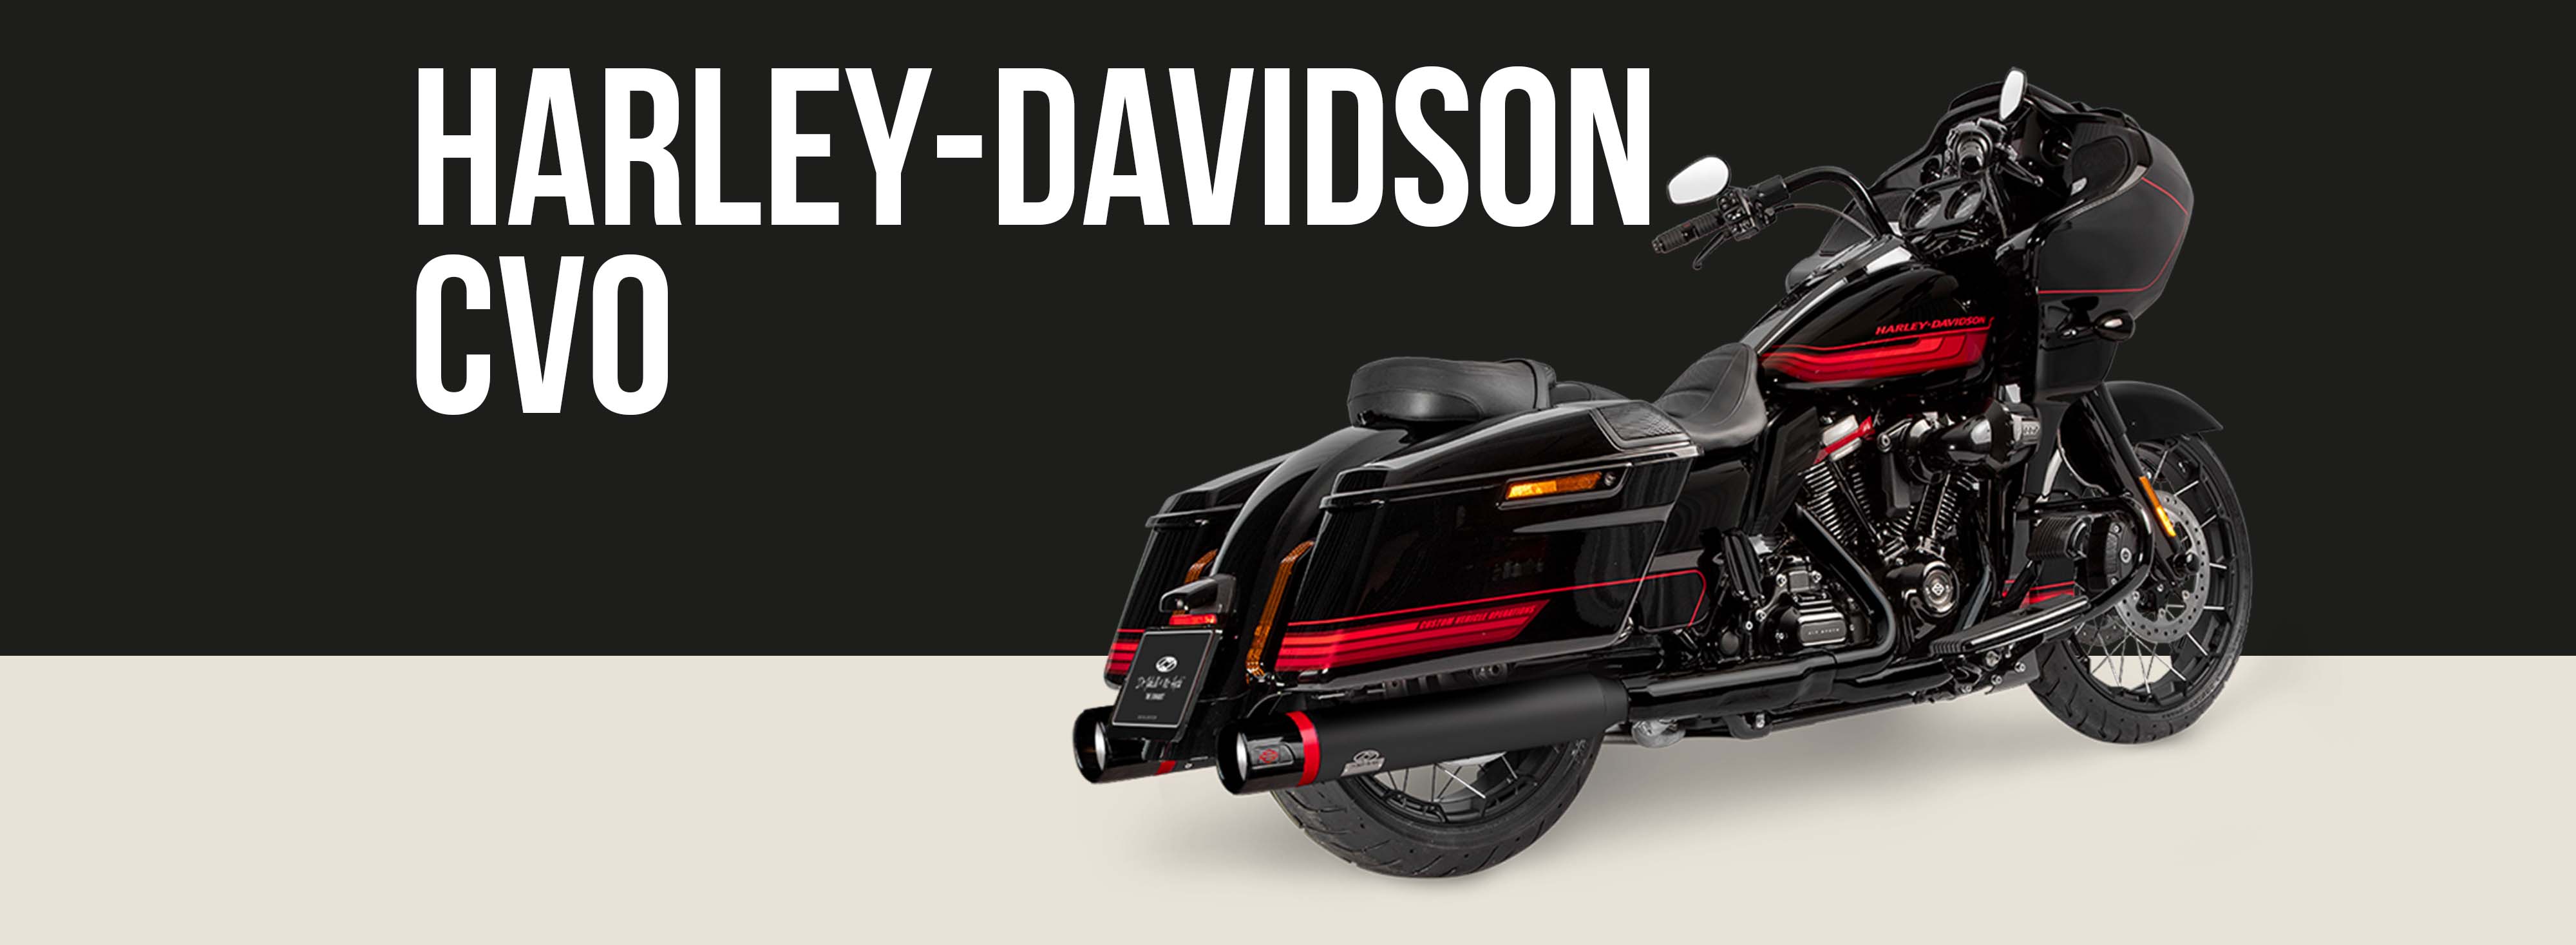 Harley-davidson CVO Motorcycle Brand Page Header